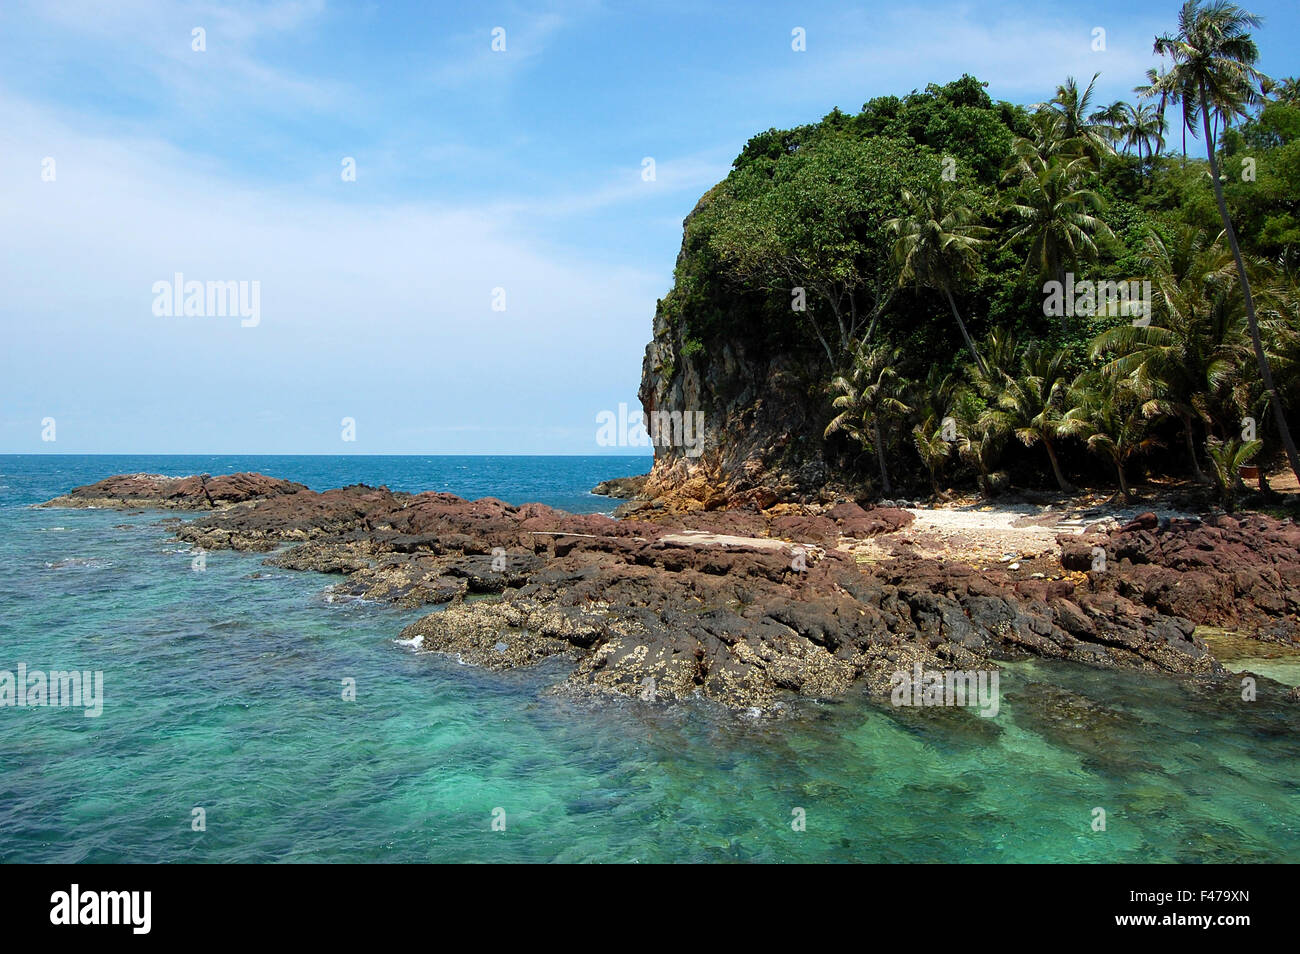 Coastline of Rawa Island in the South China Sea, Malaysia Stock Photo